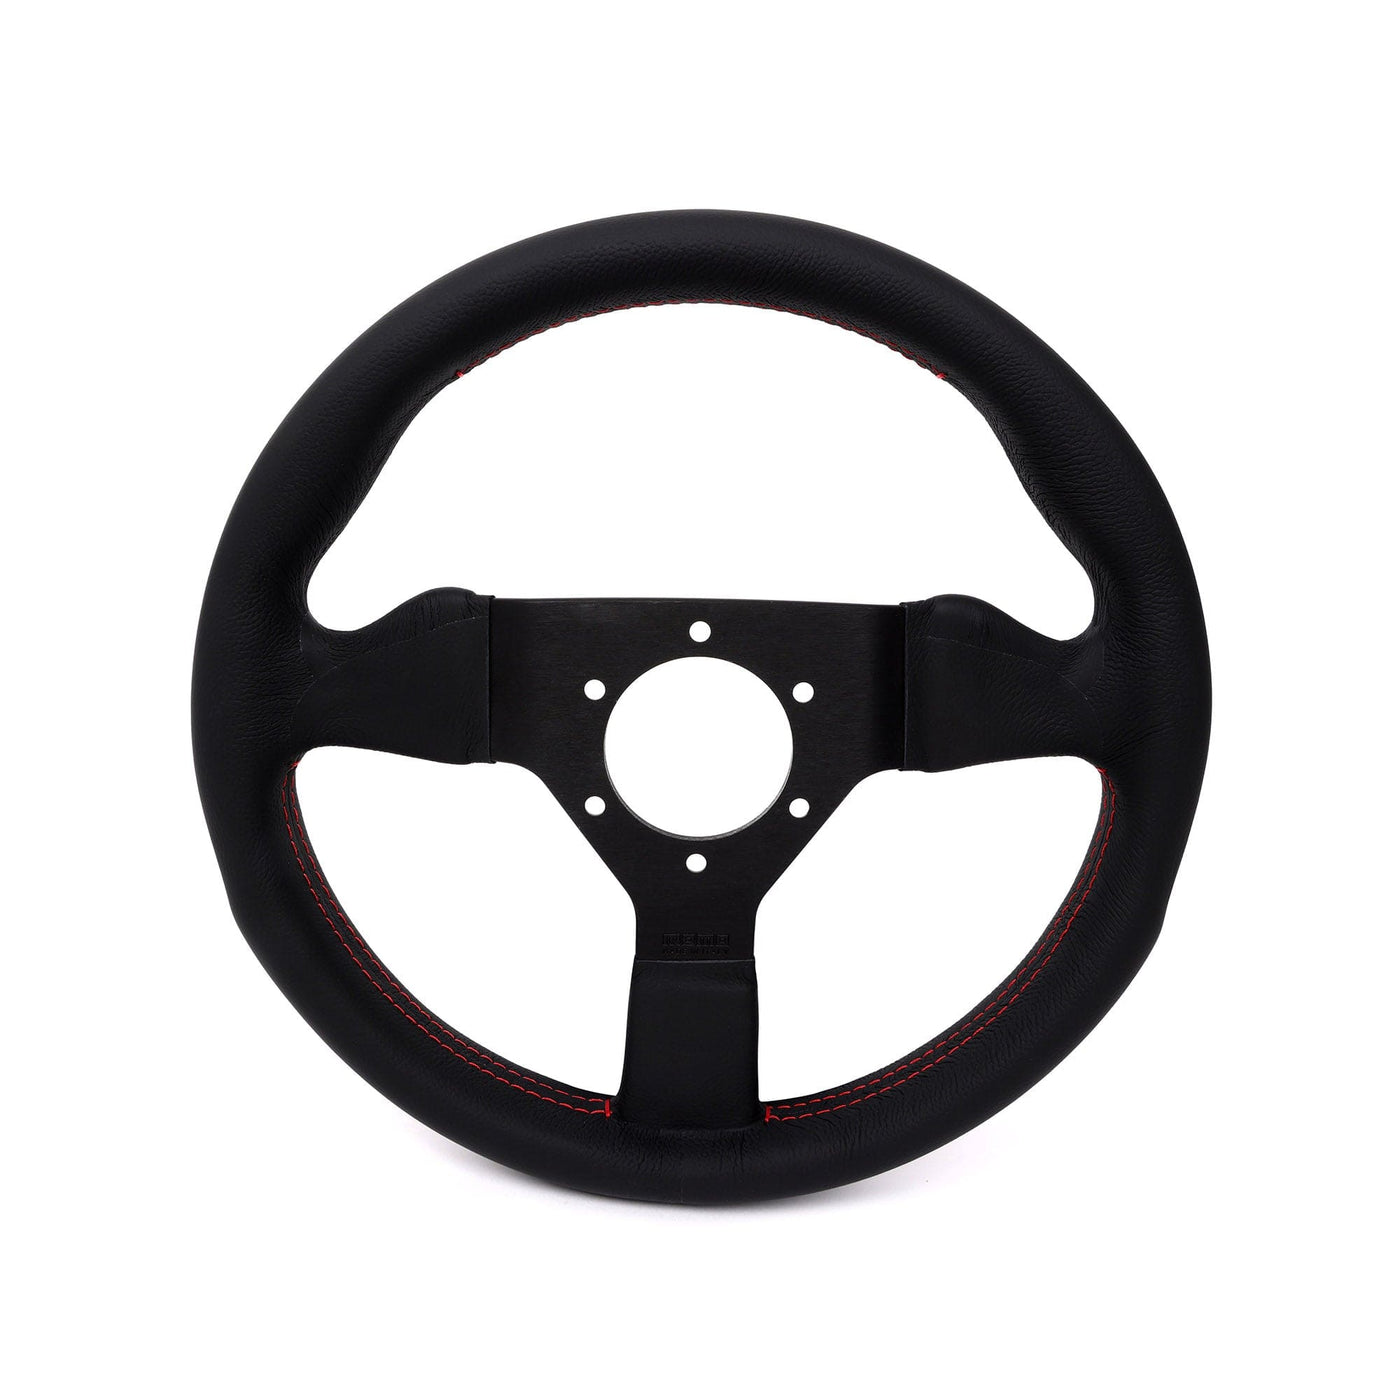 Momo Motorsports Steering Wheels Momo Montecarlo Leather Steering Wheel 320 mm - Black/Red Stitch/Black Spokes